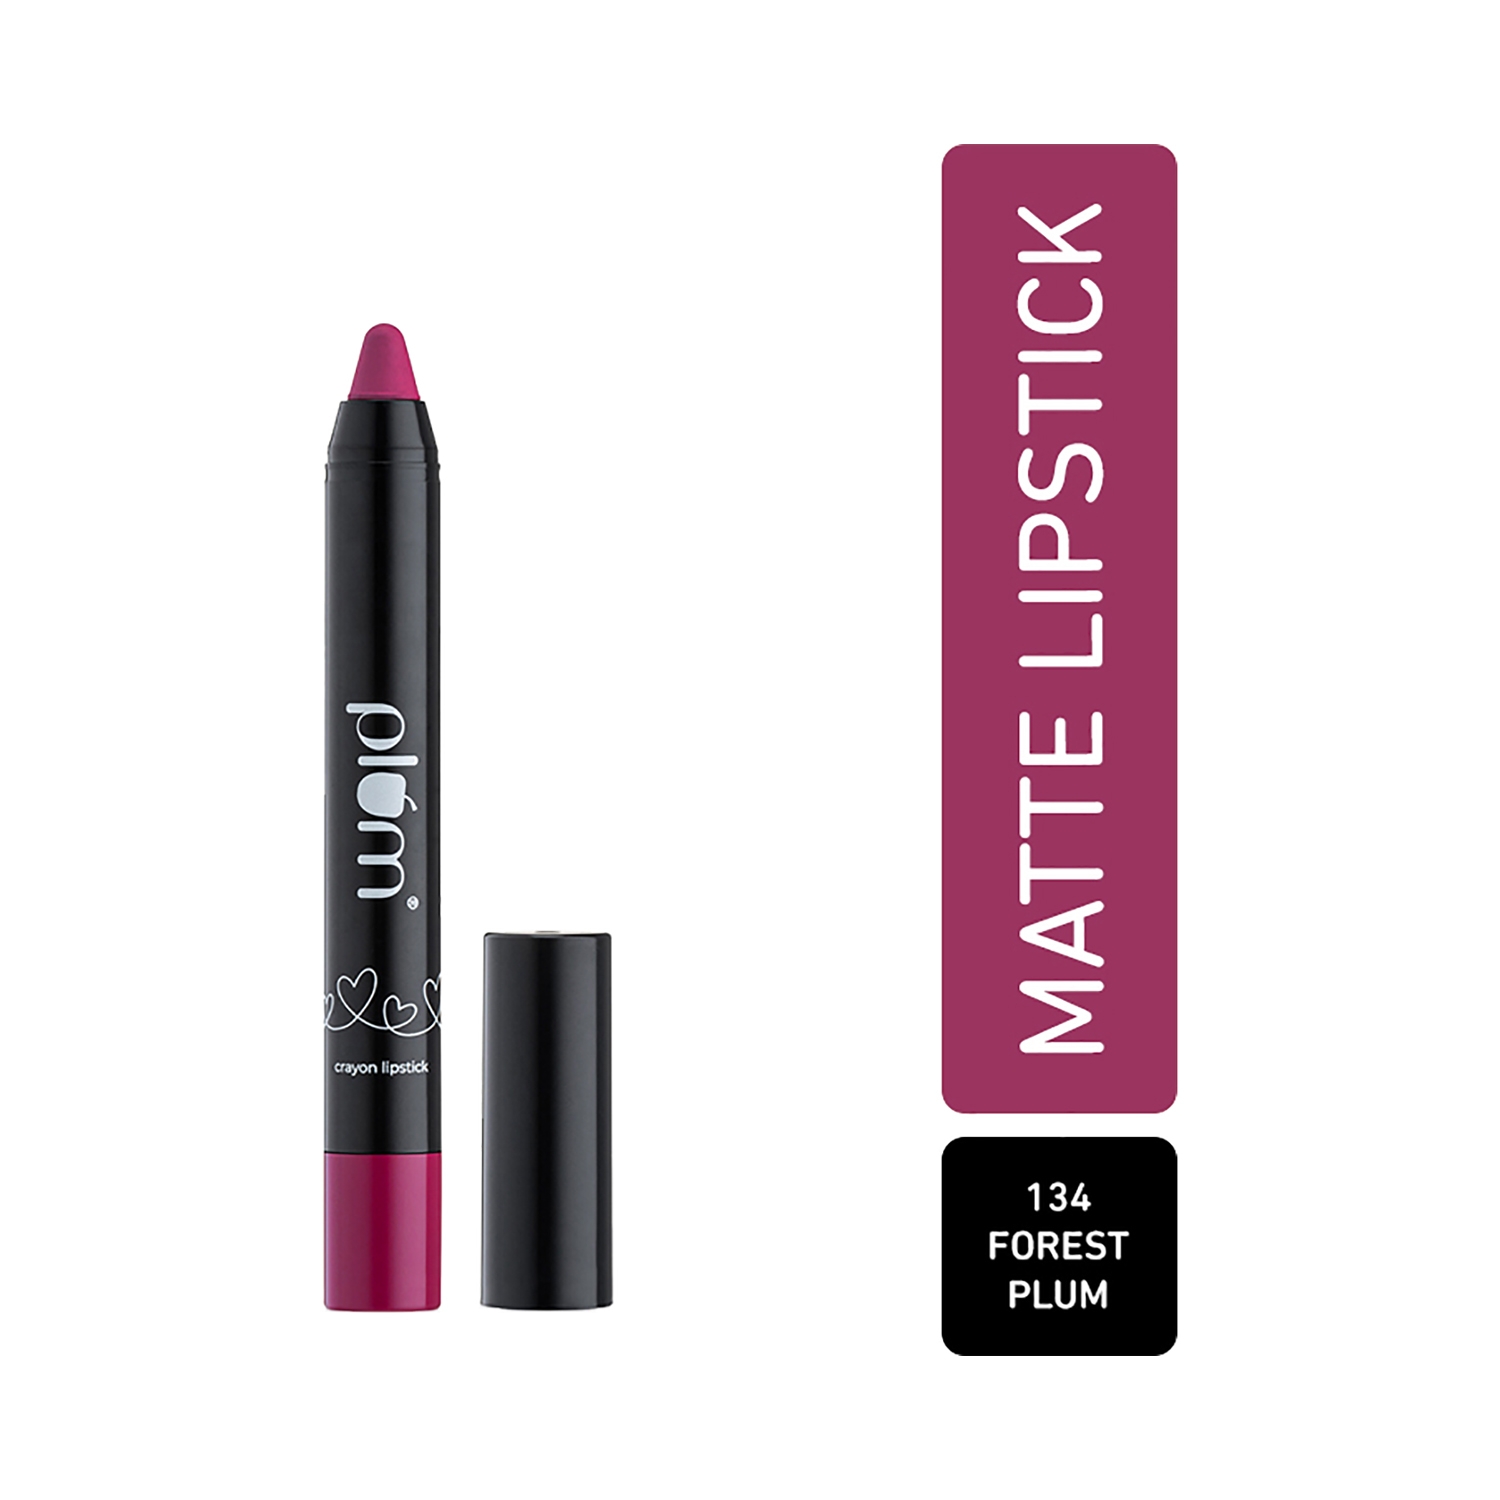 Plum | Plum Twist & Go Matte Crayon Lipstick with Ceramides & Hyaluronic Acid - 134 Forrest Plum (1.8g)